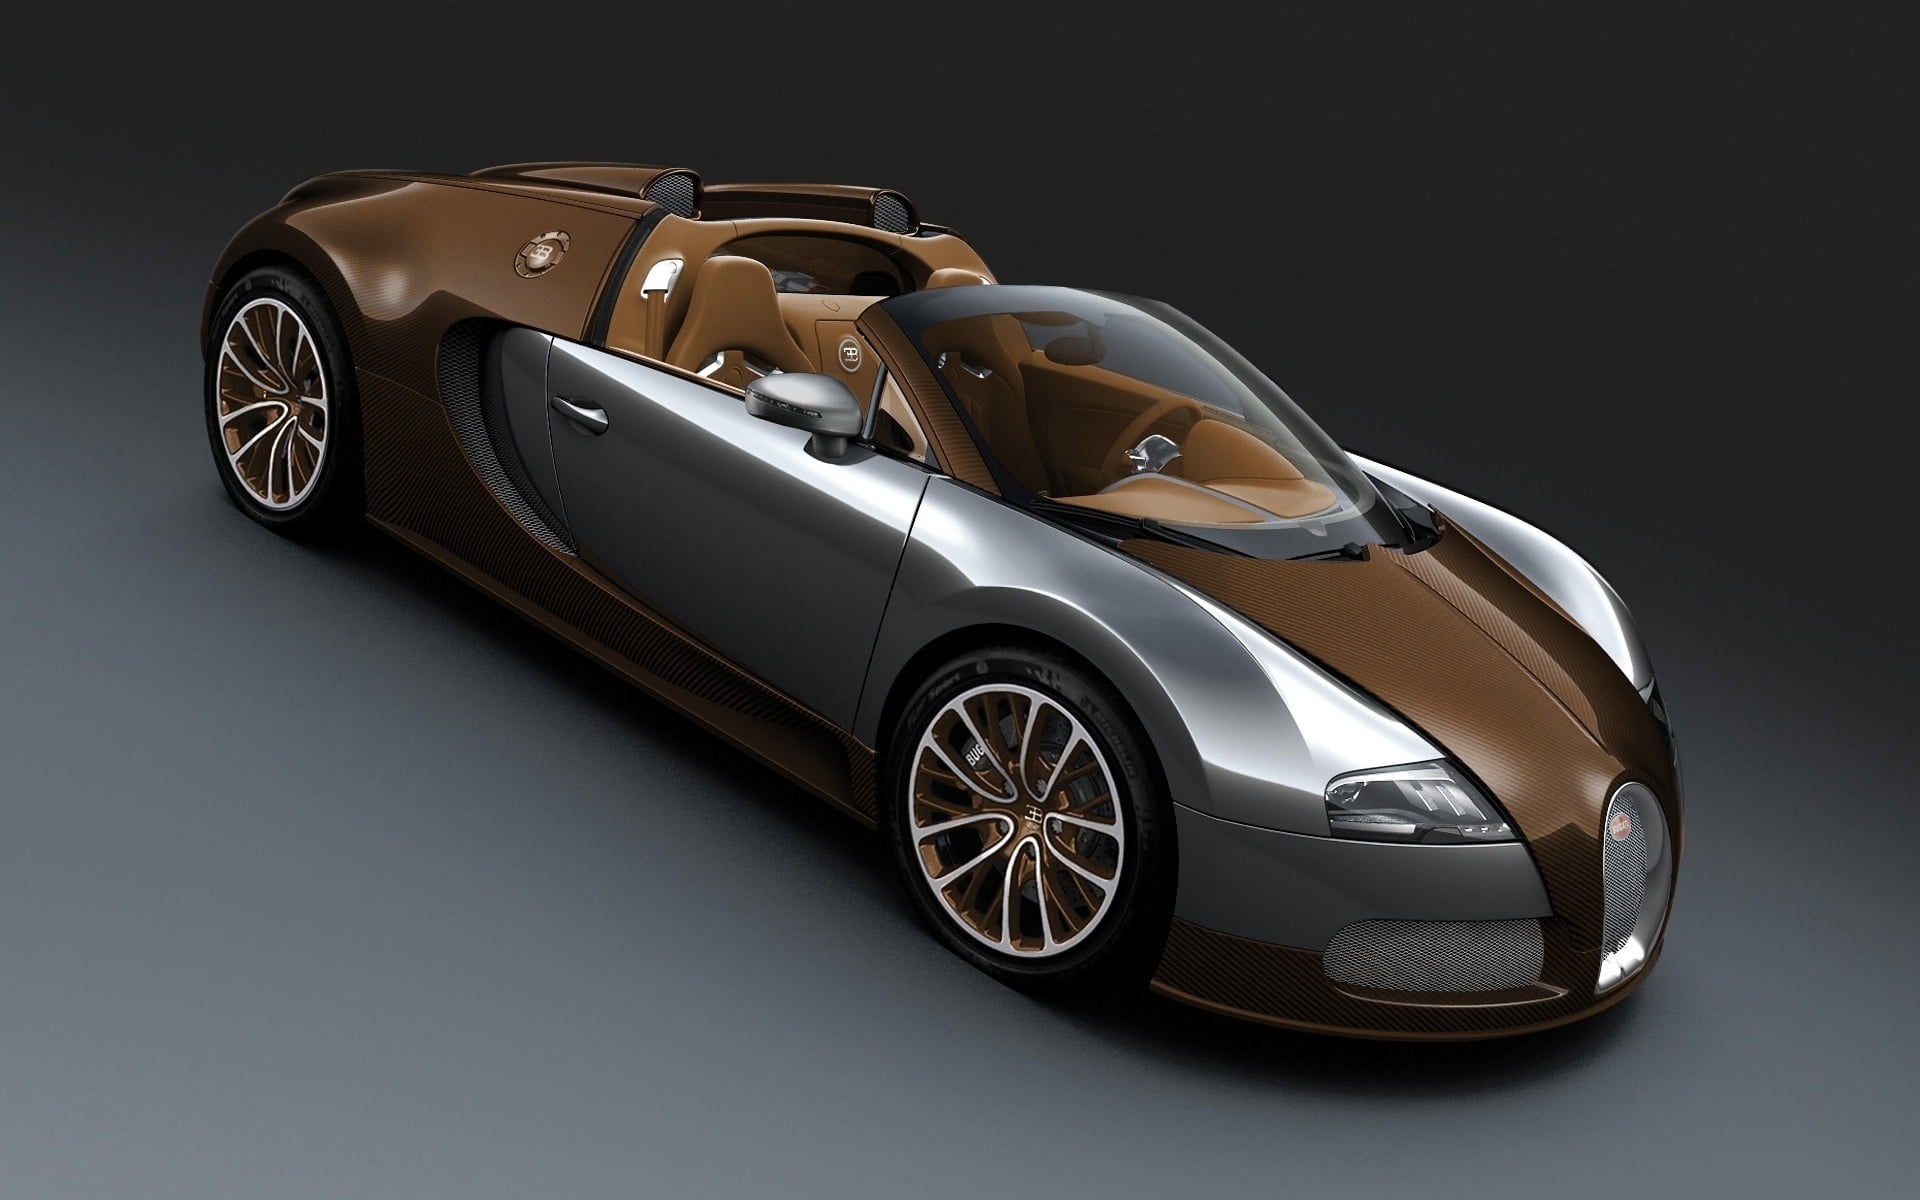 silver and brown Bugatti Veyron